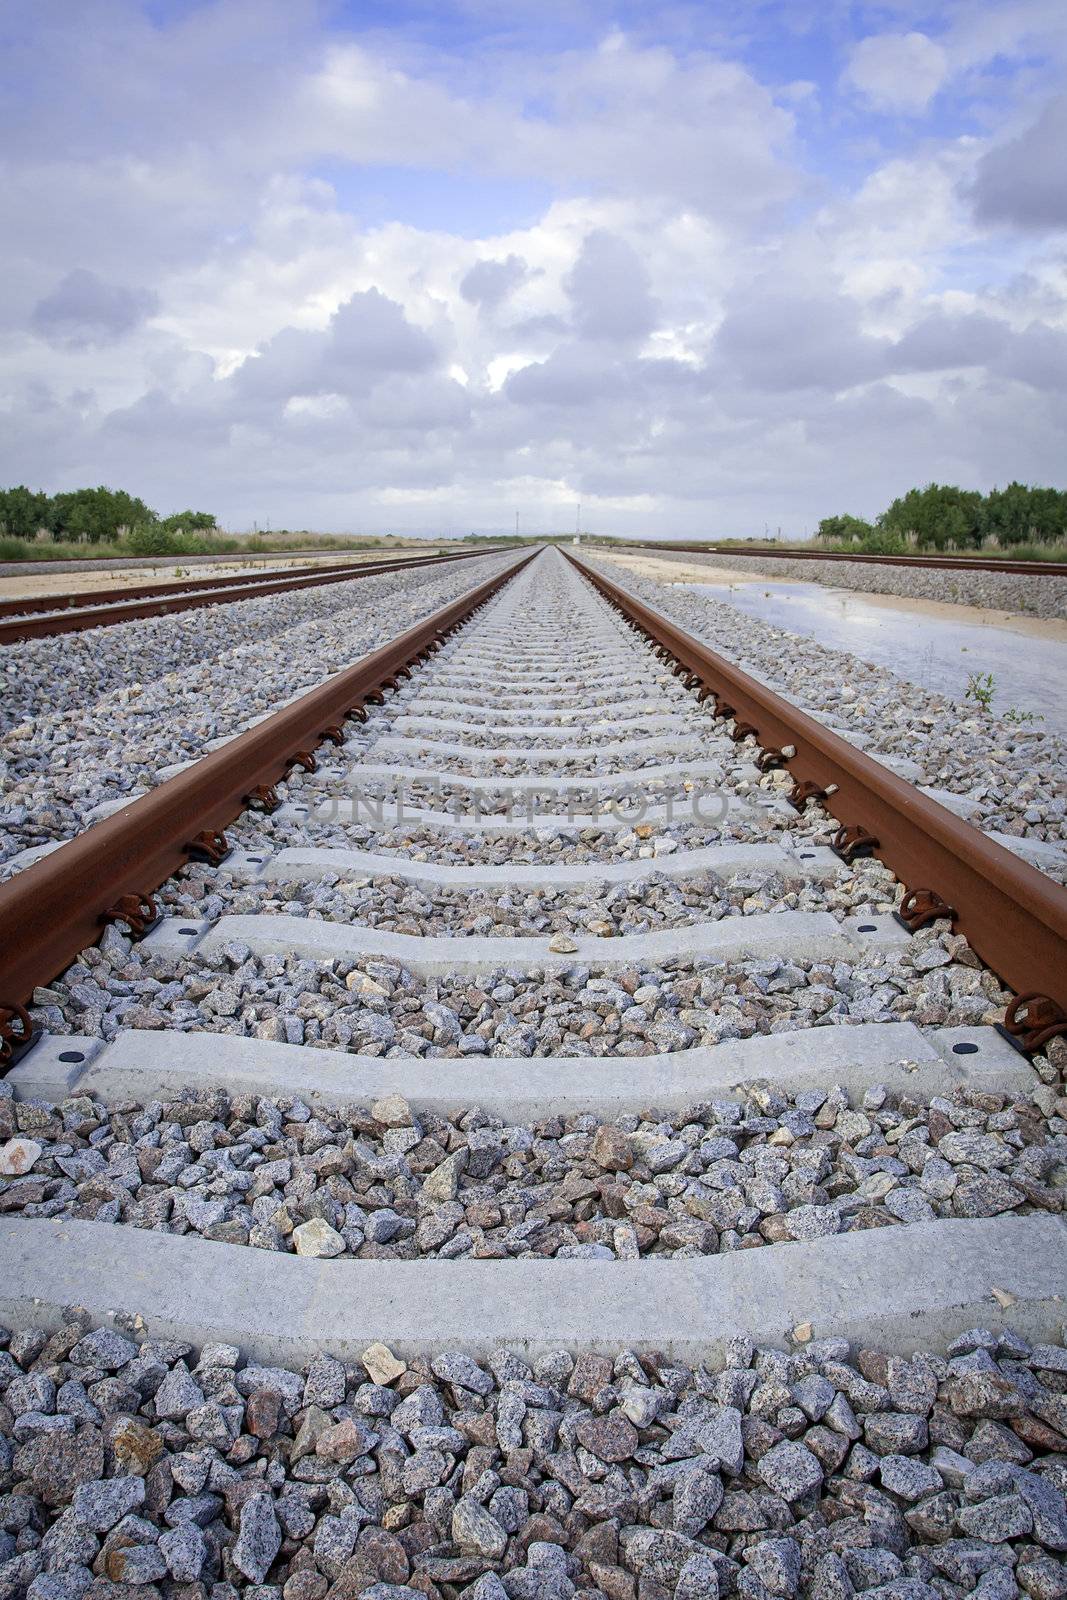  Railroad track by PauloResende